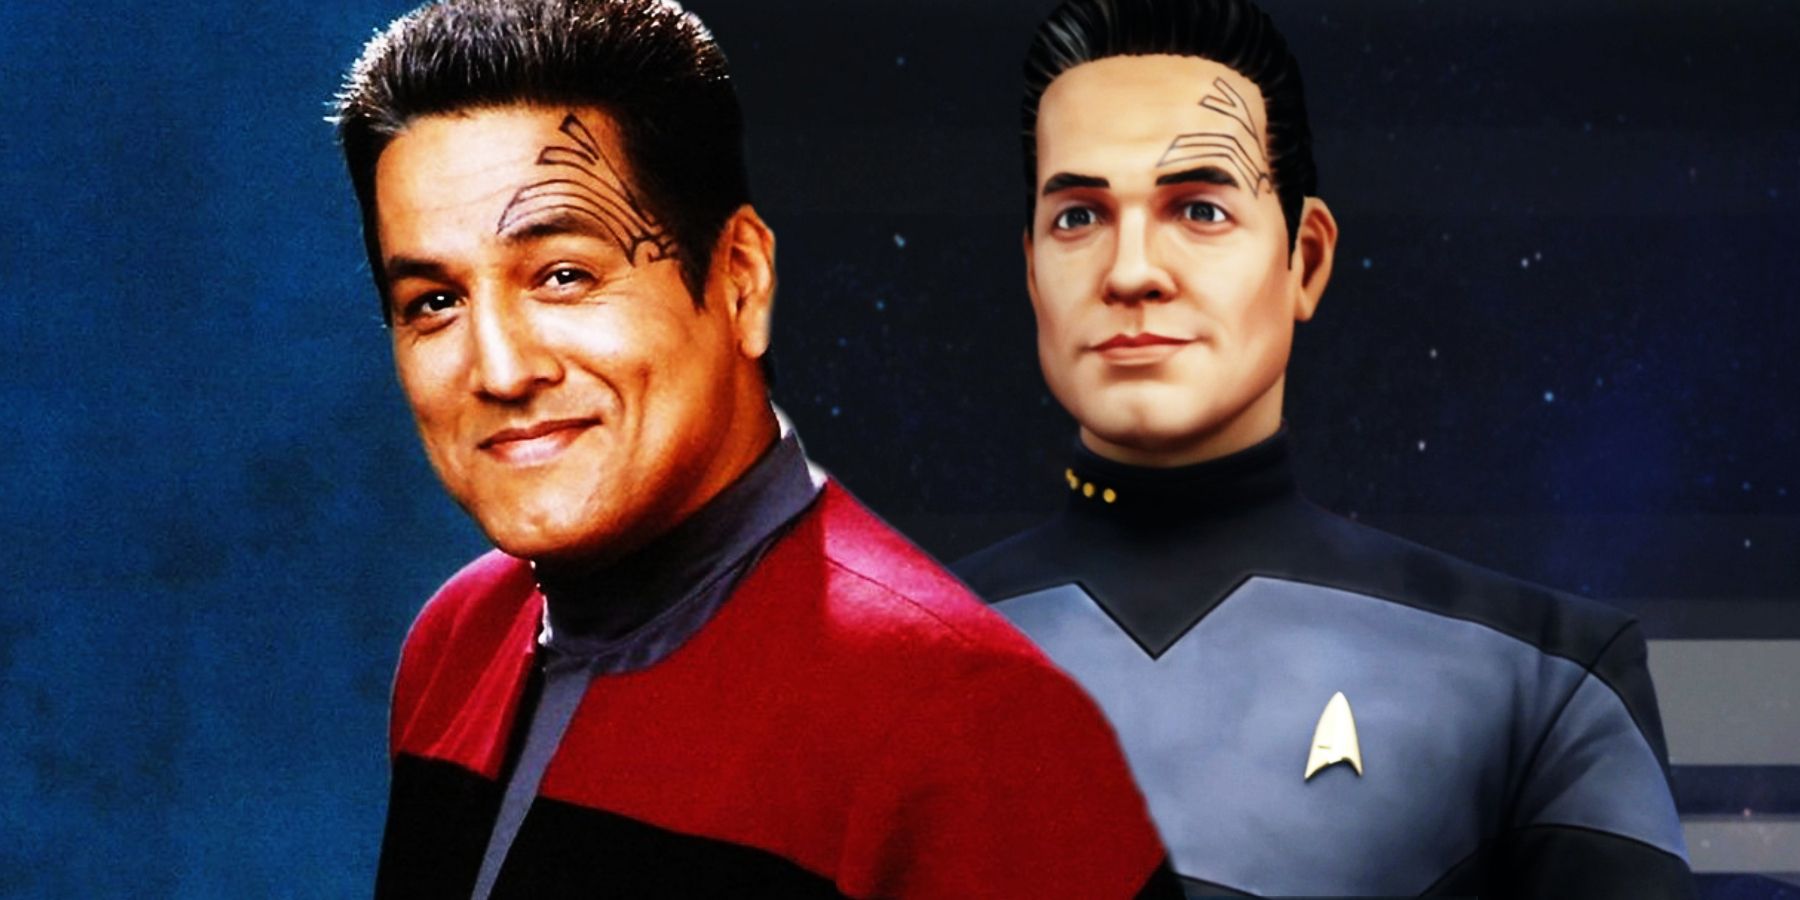 Robert Beltran as Chakotay in Star Trek: Voyager and Star Trek: Prodigy